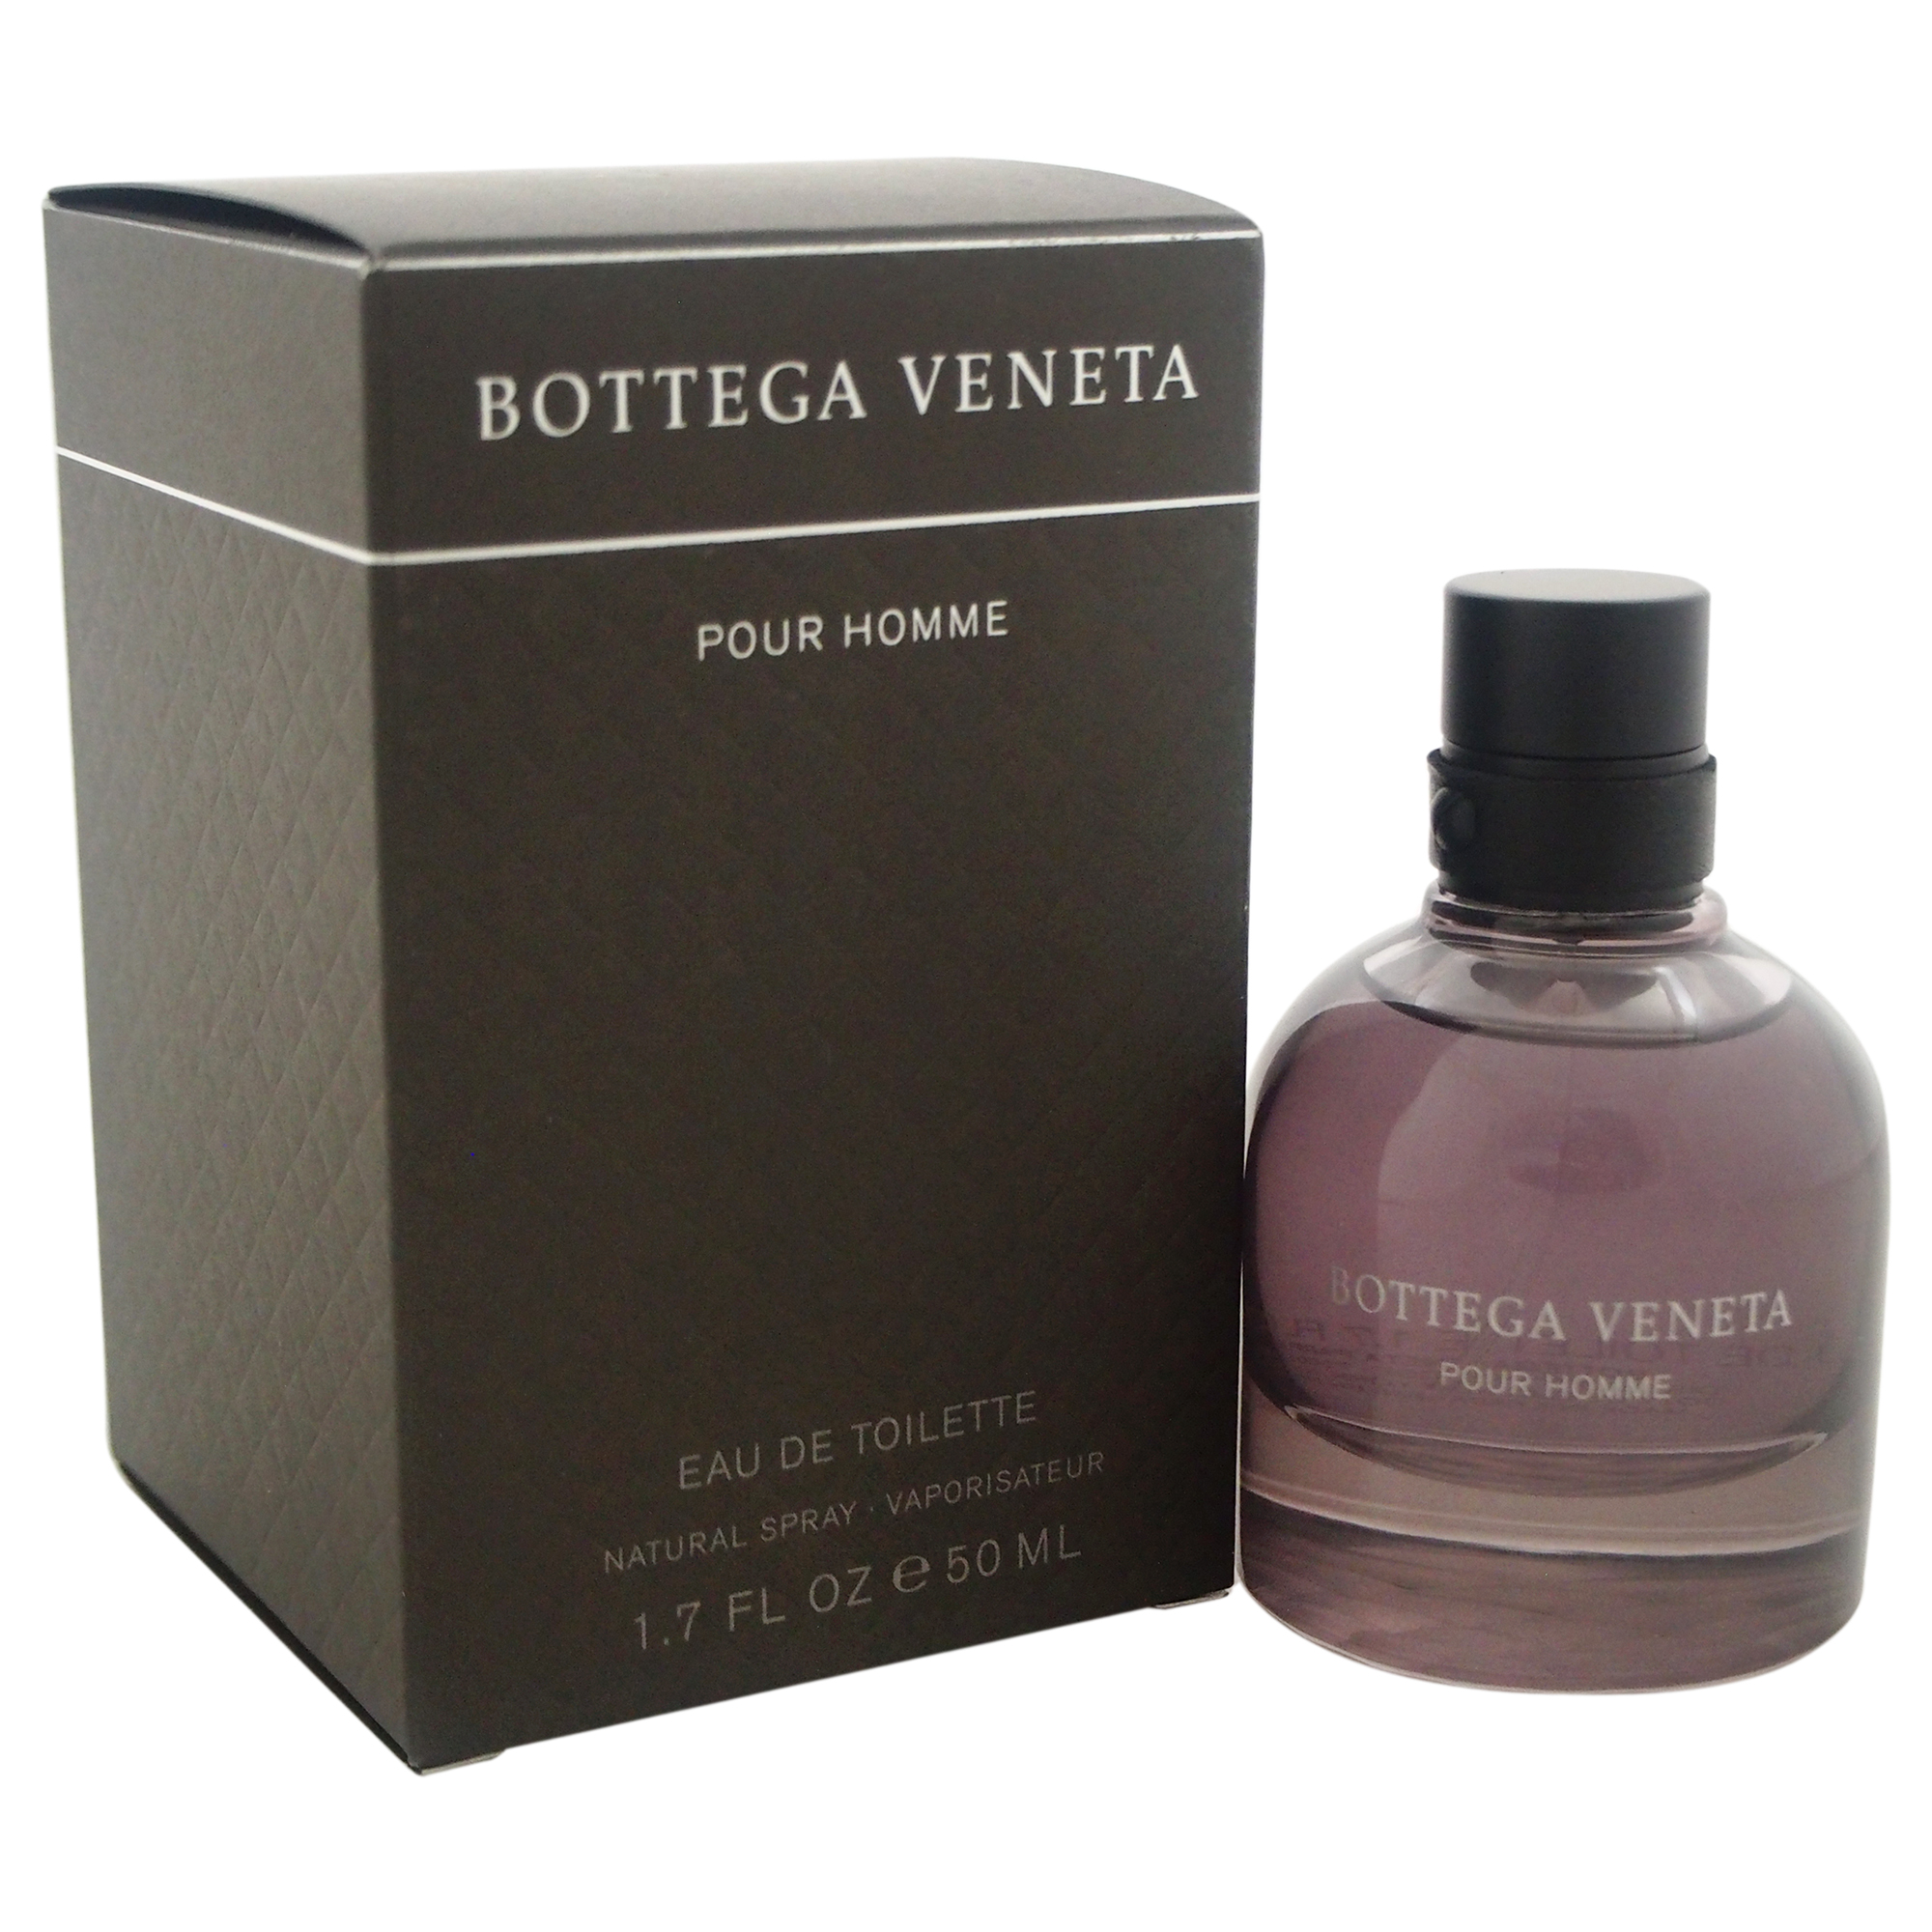 Bottega Veneta by  for Men - 1.7 oz EDT Spray